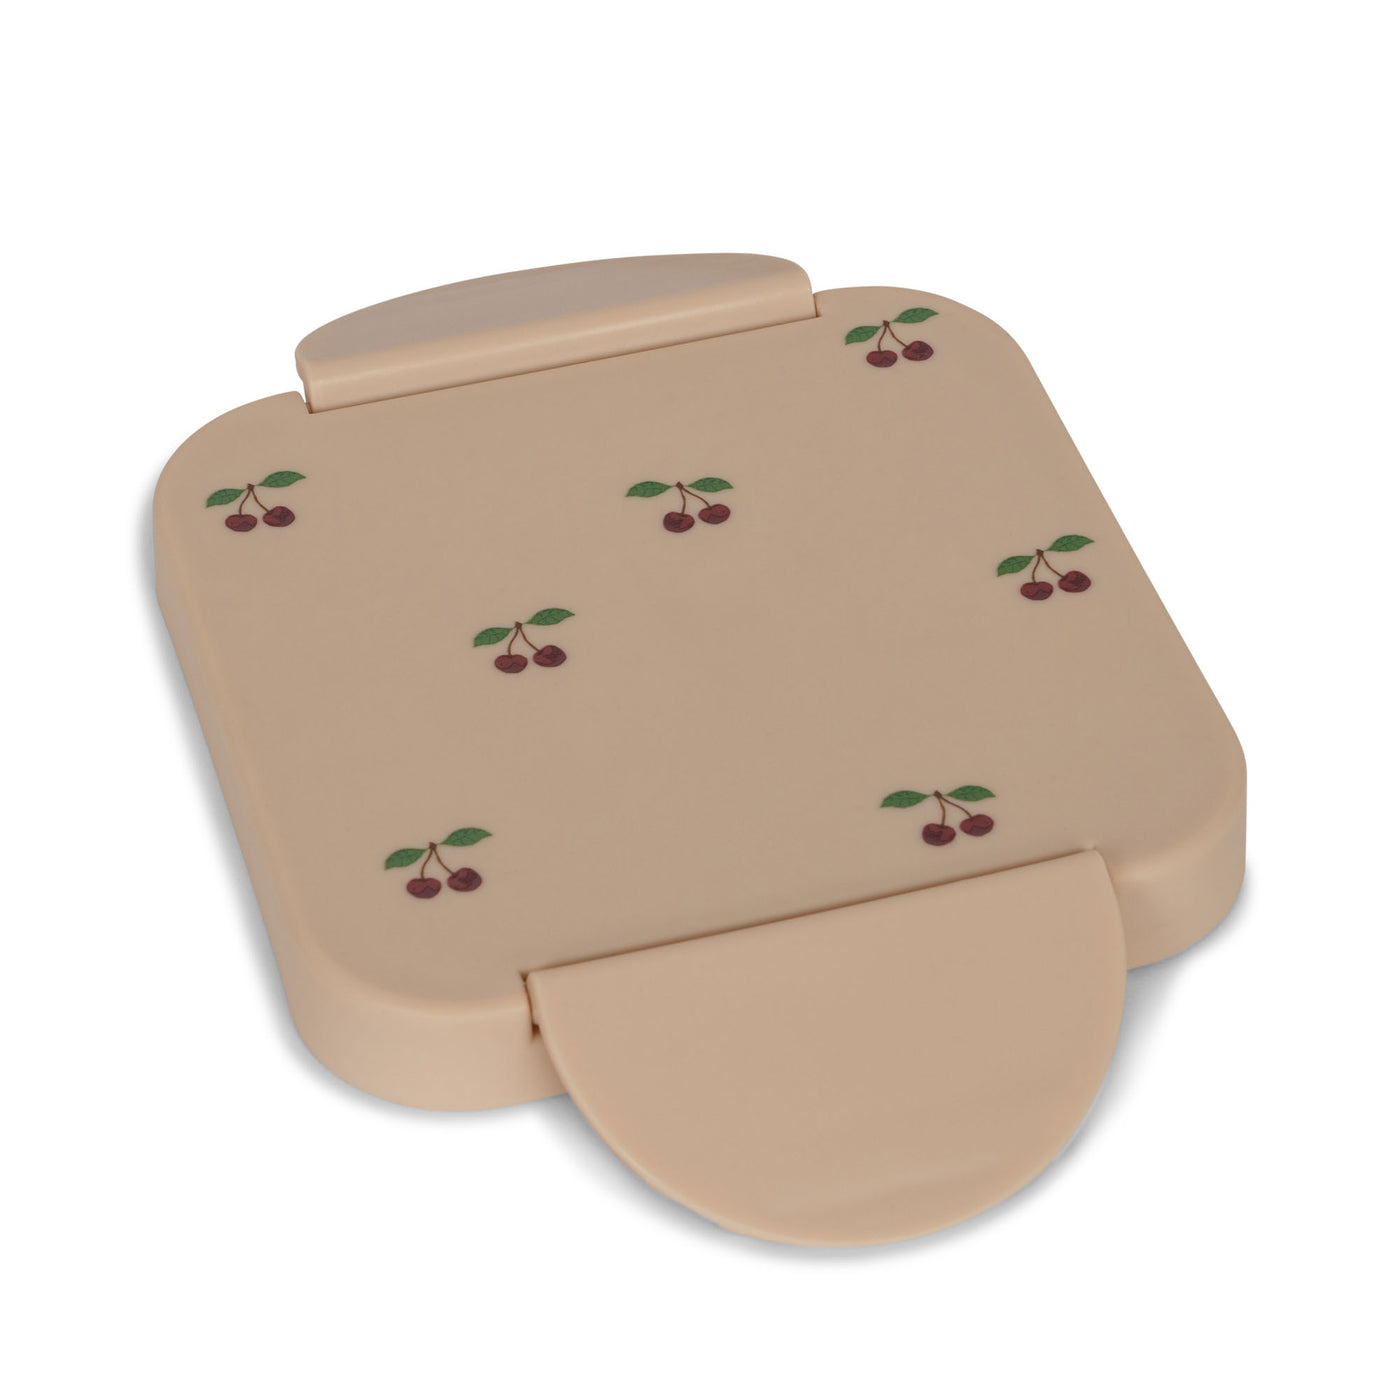 Lunch box (KS6433)